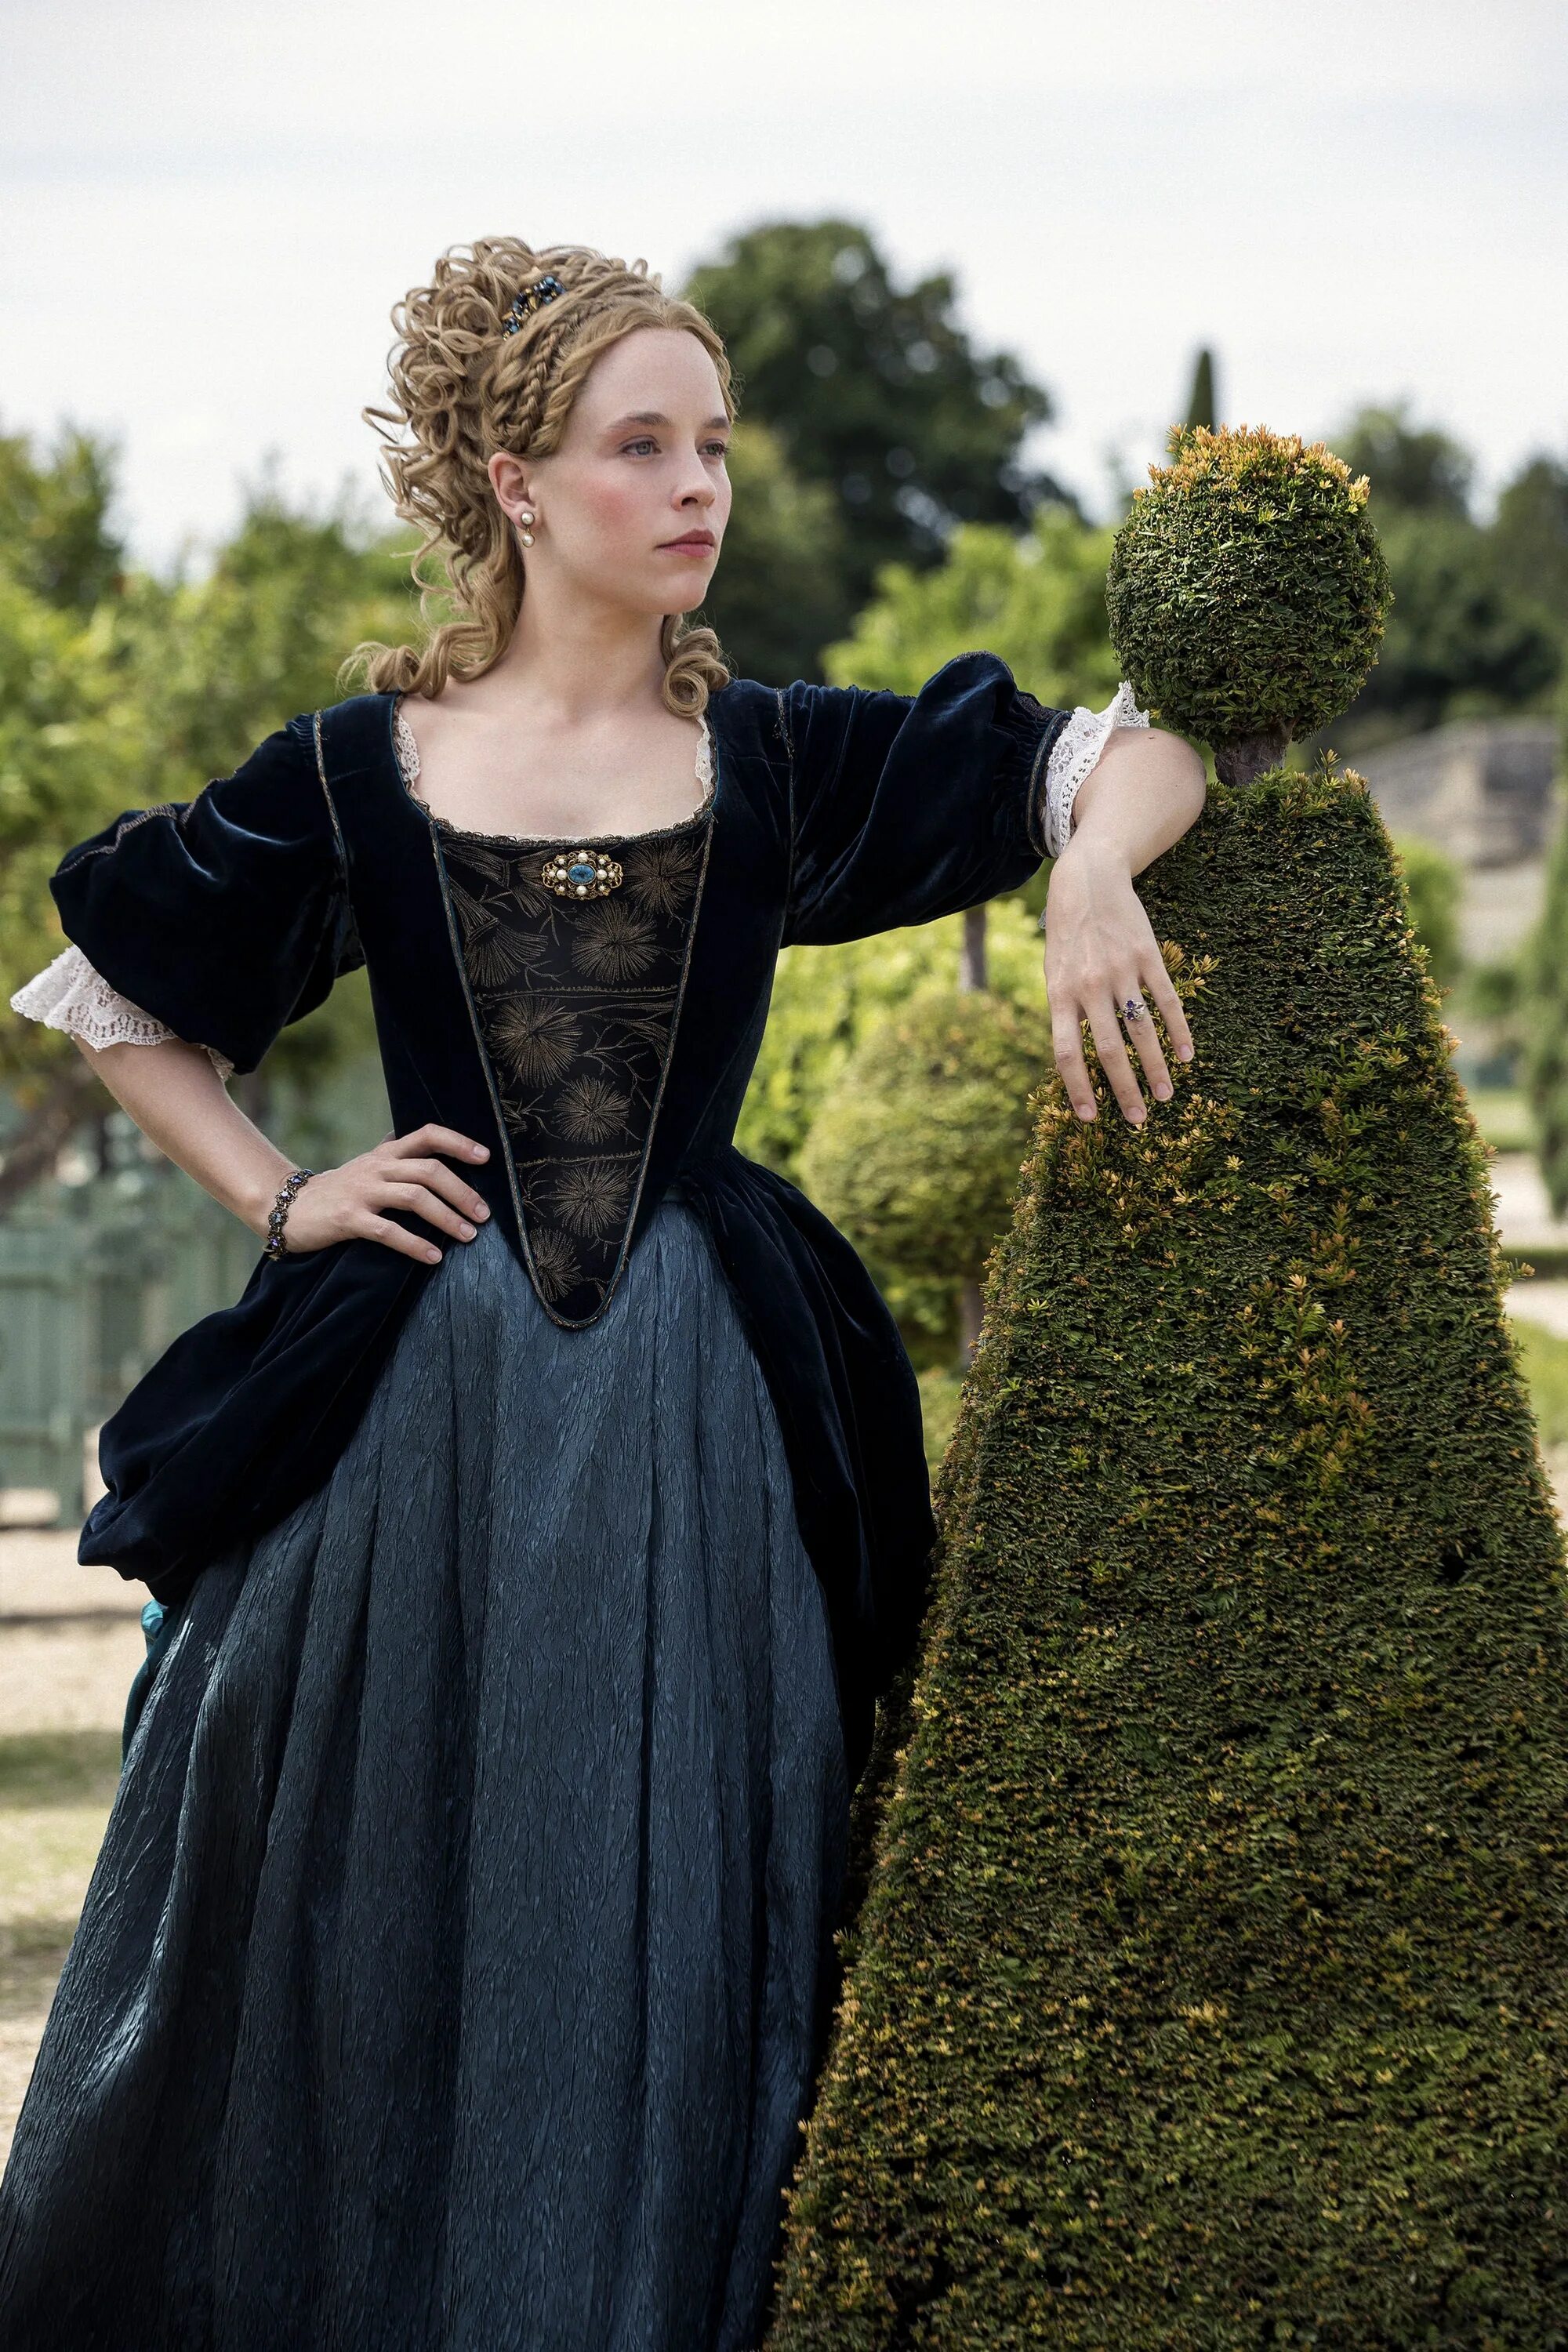 Мода версаль. Платье Версаль 17 век. Мода Версаля.